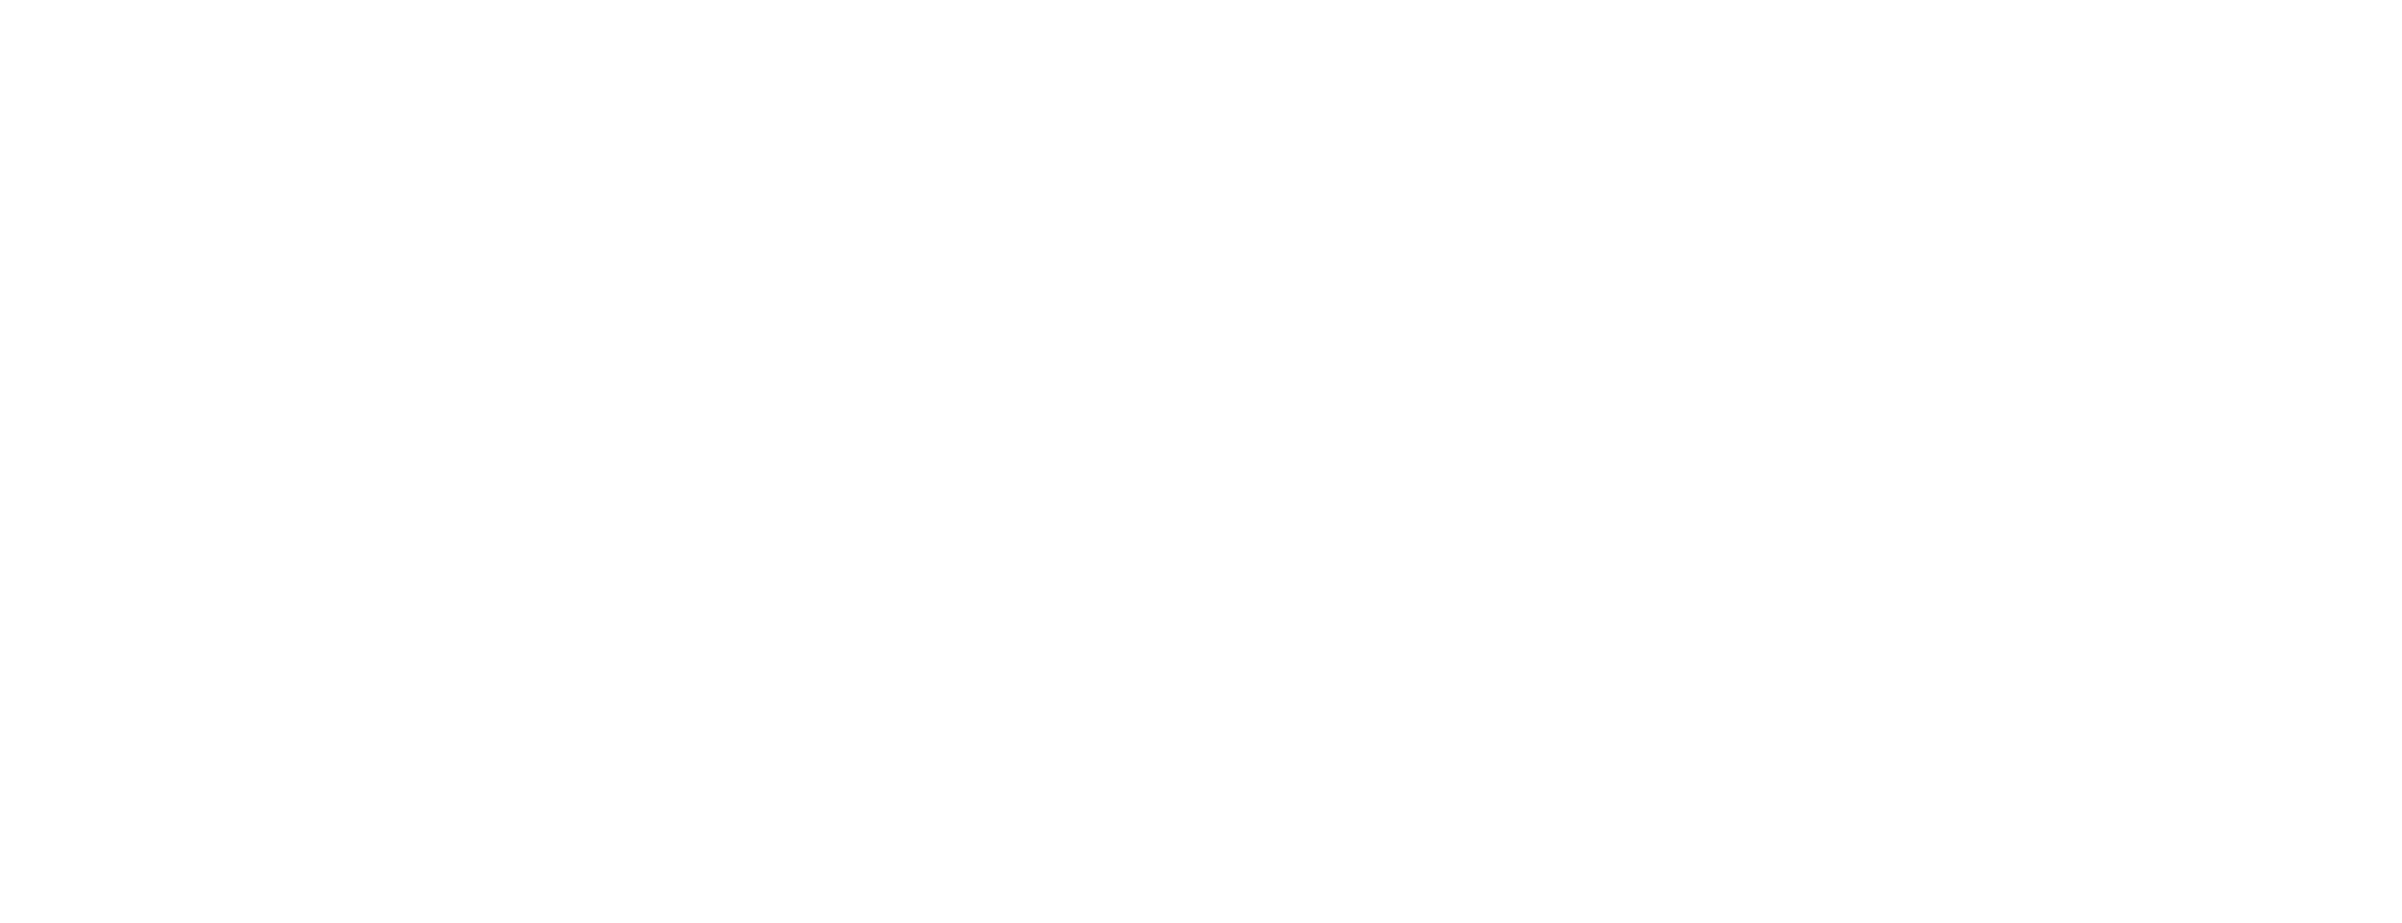 creation clipart new creation